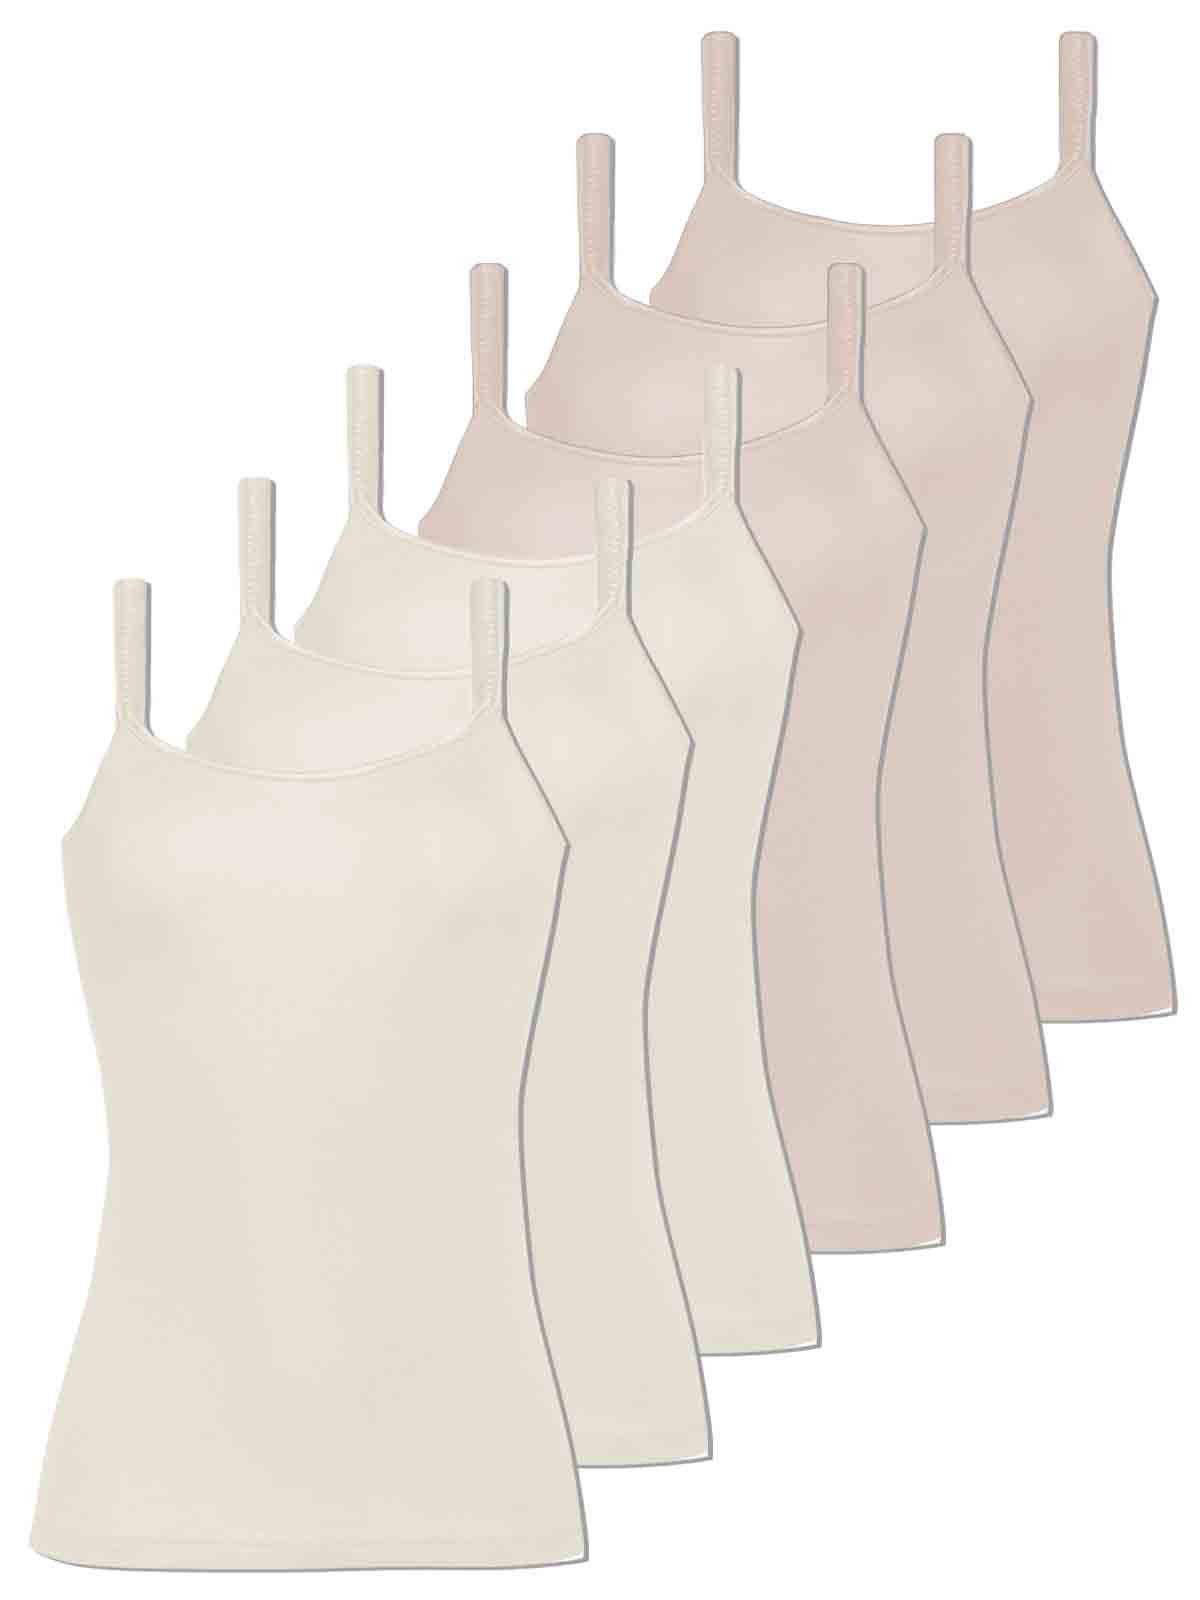 COMAZO Achselhemd Damen Träger-Unterhemd Pack haut-offwhite - (Packung, 6-St) 6er